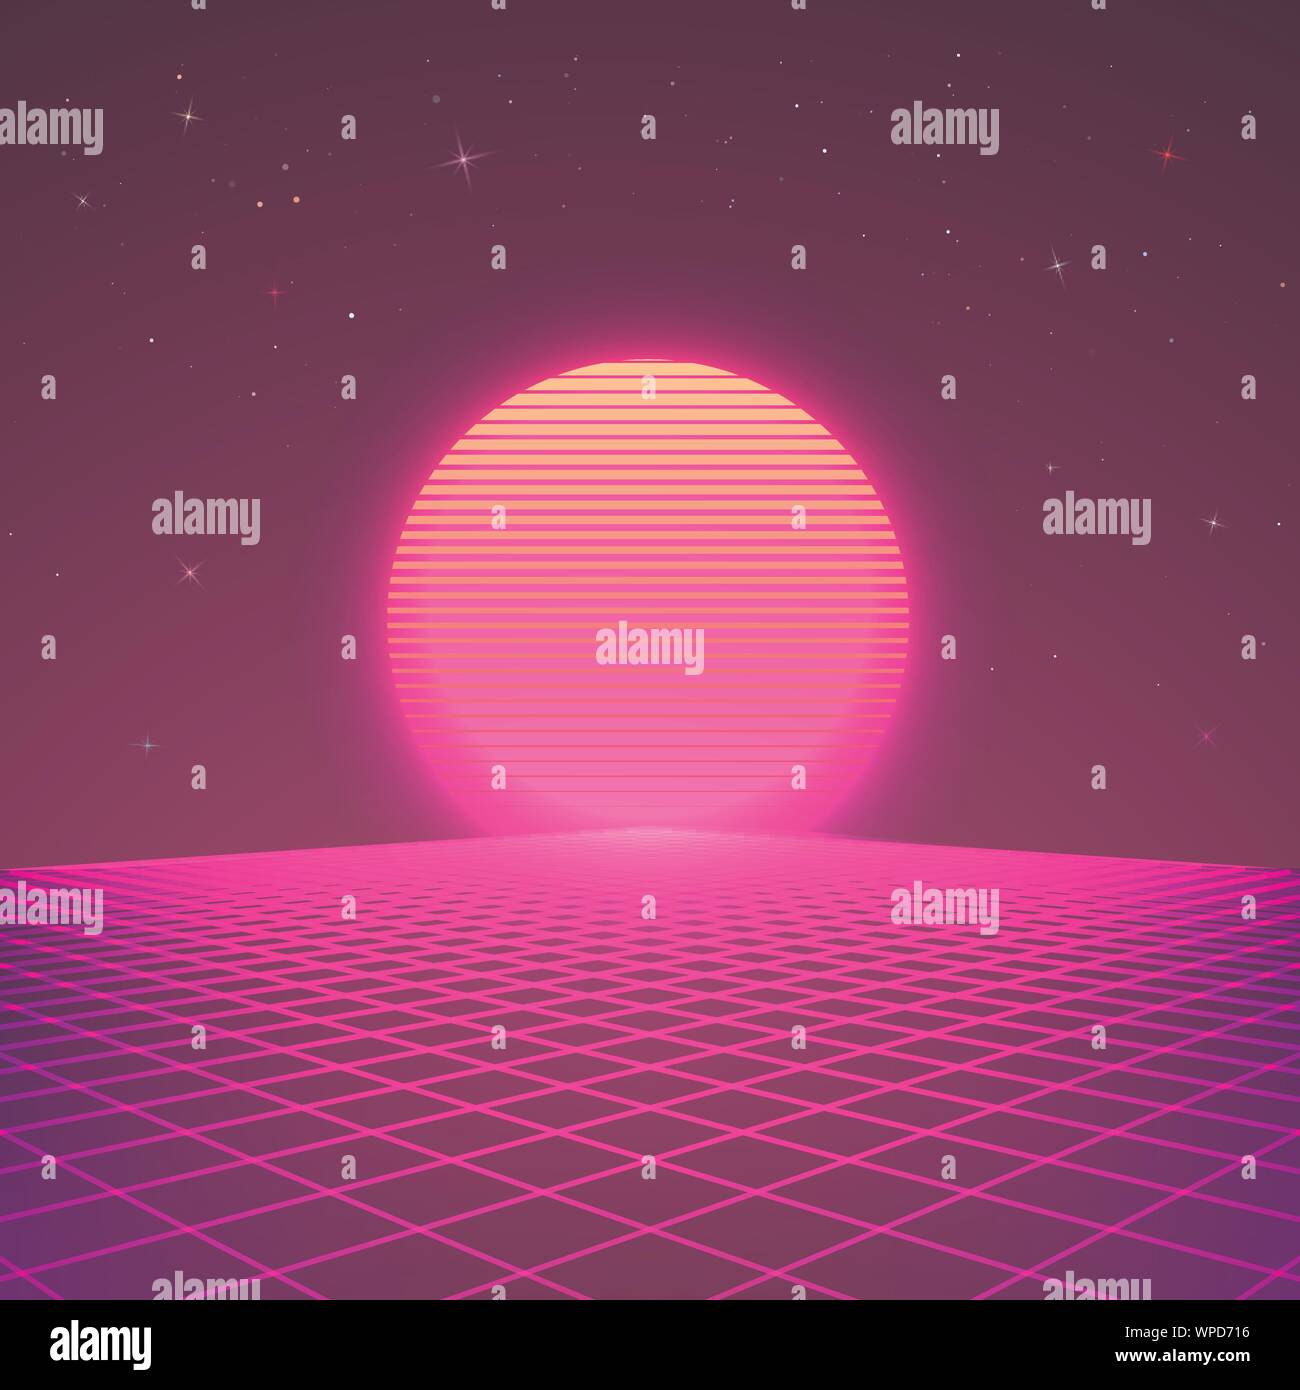 Im Stil der 80er. Sci-fi oder retro Musik Poster wallpaper. Flyer für Retro Party 80s Vector Illustration Stock Vektor